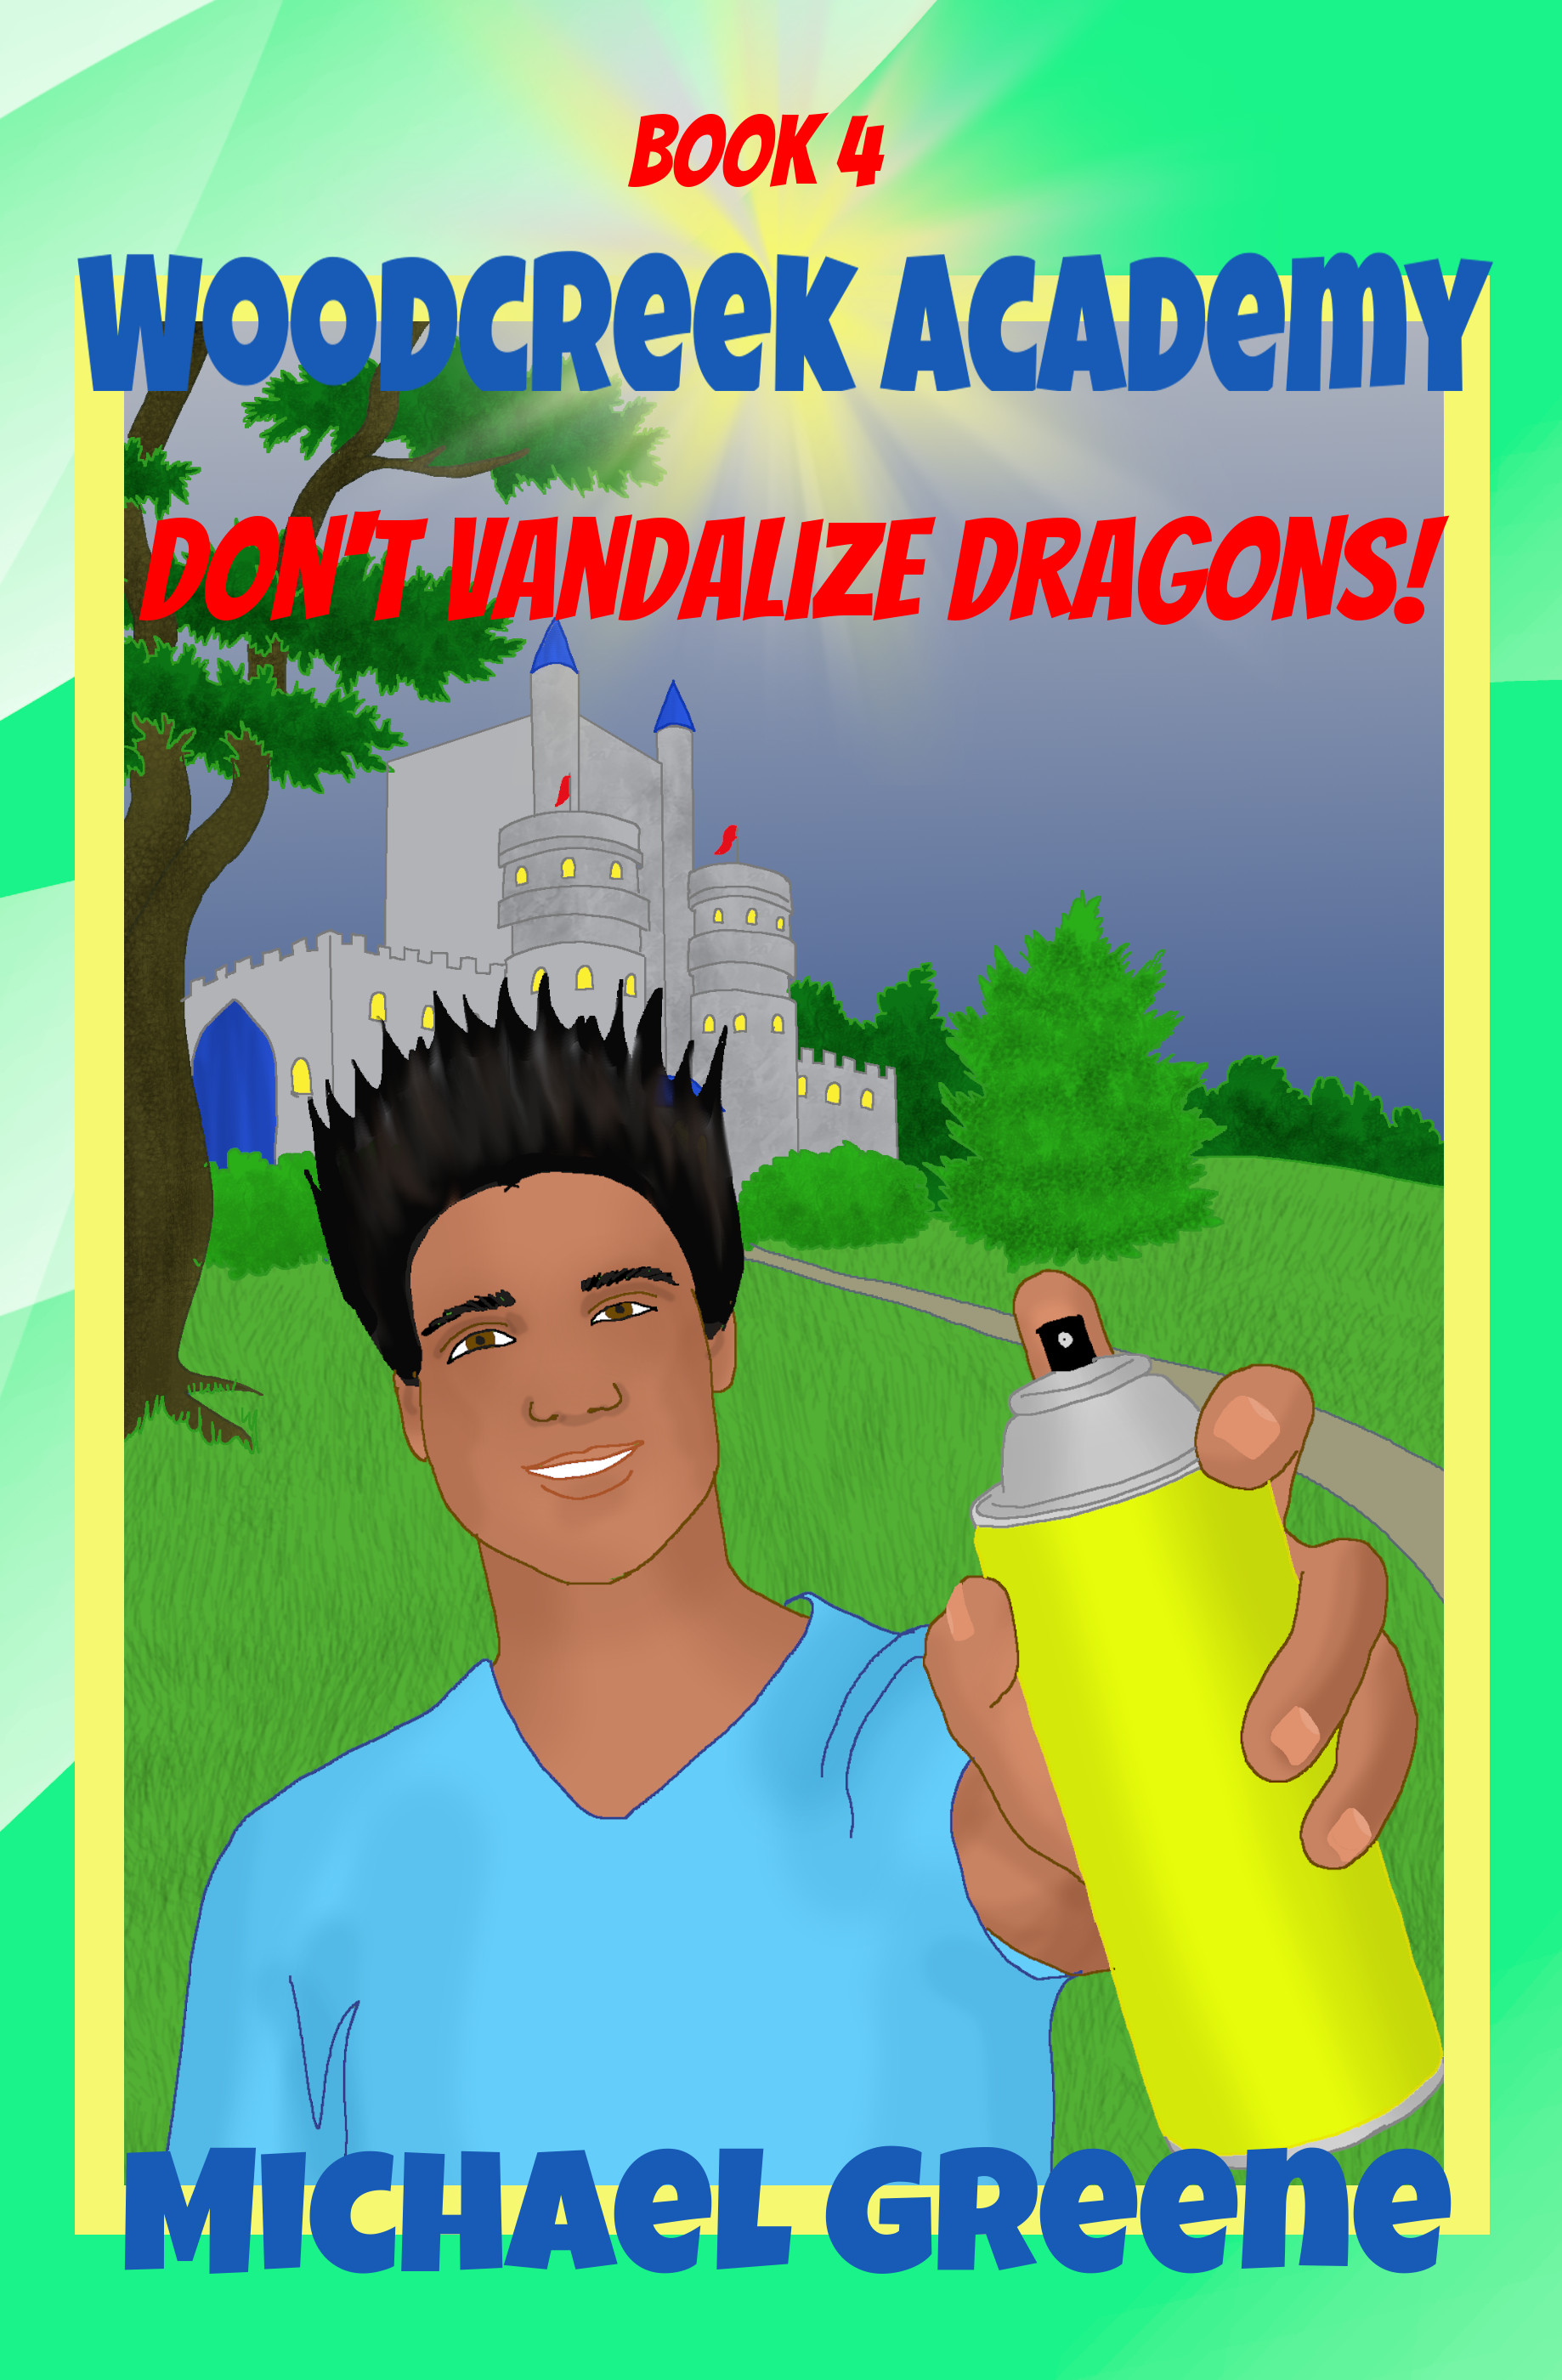 Woodcreek Academy 4: Don't Vandalize Dragons!